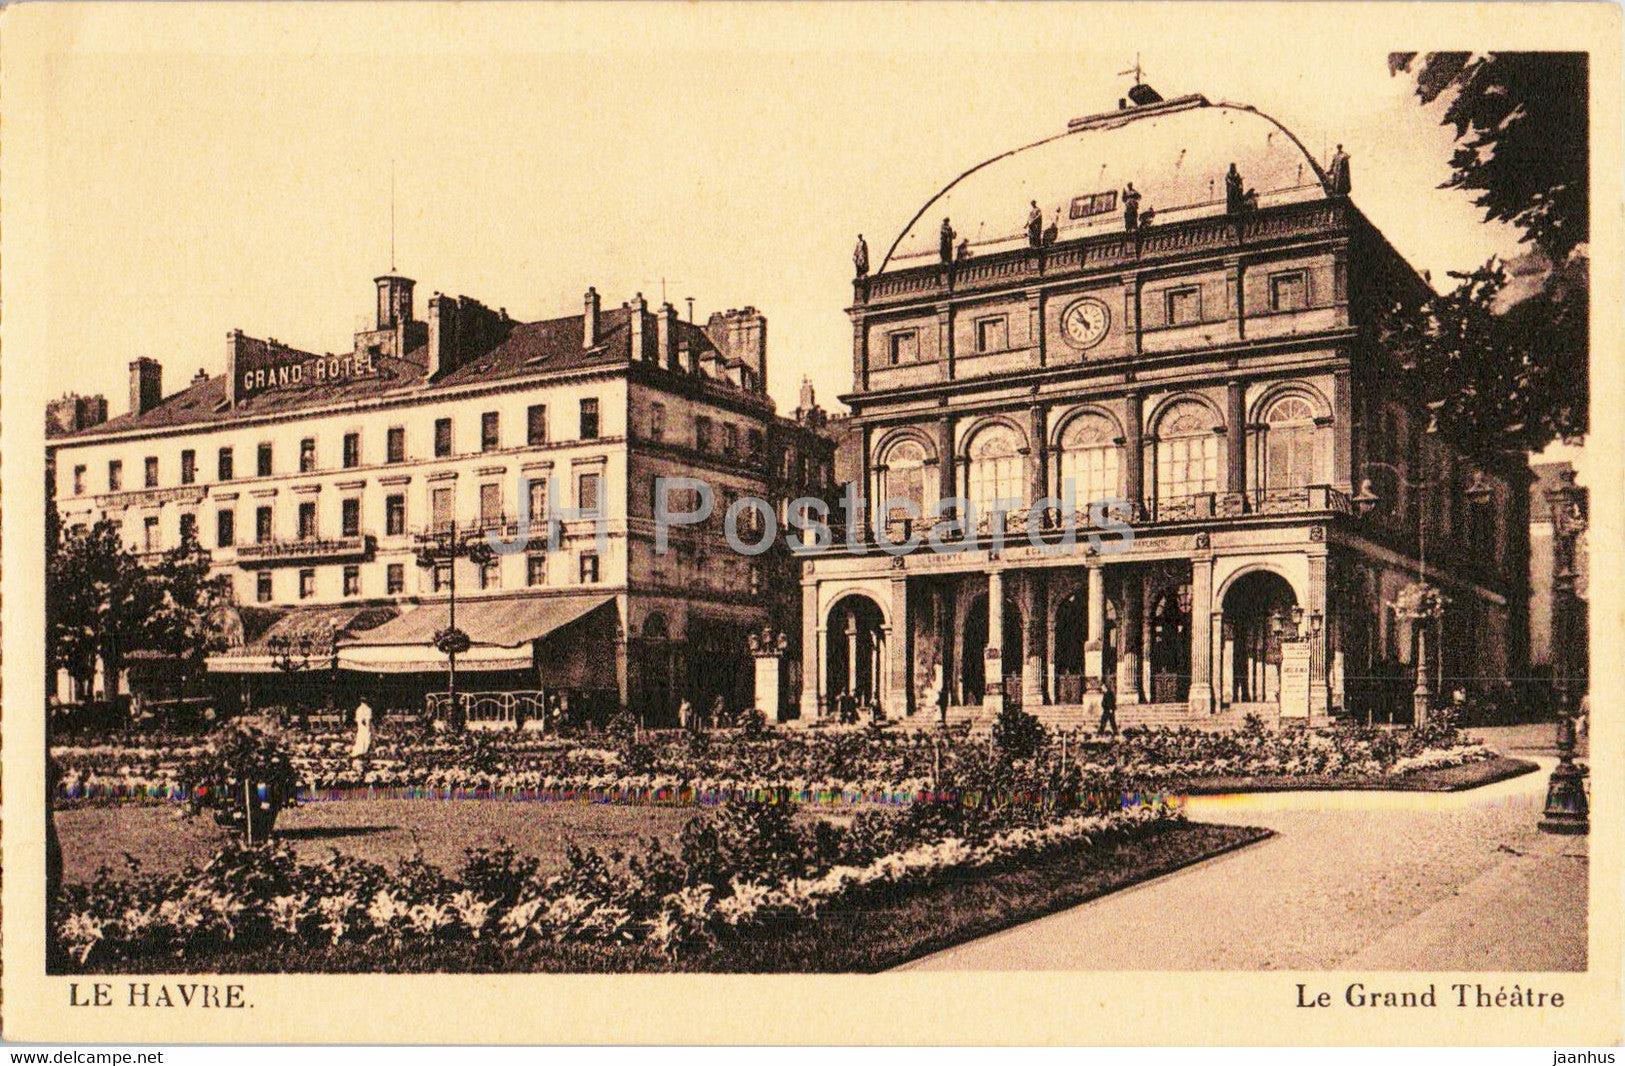 Le Havre - Le Grand Theatre - old postcard - France - unused - JH Postcards